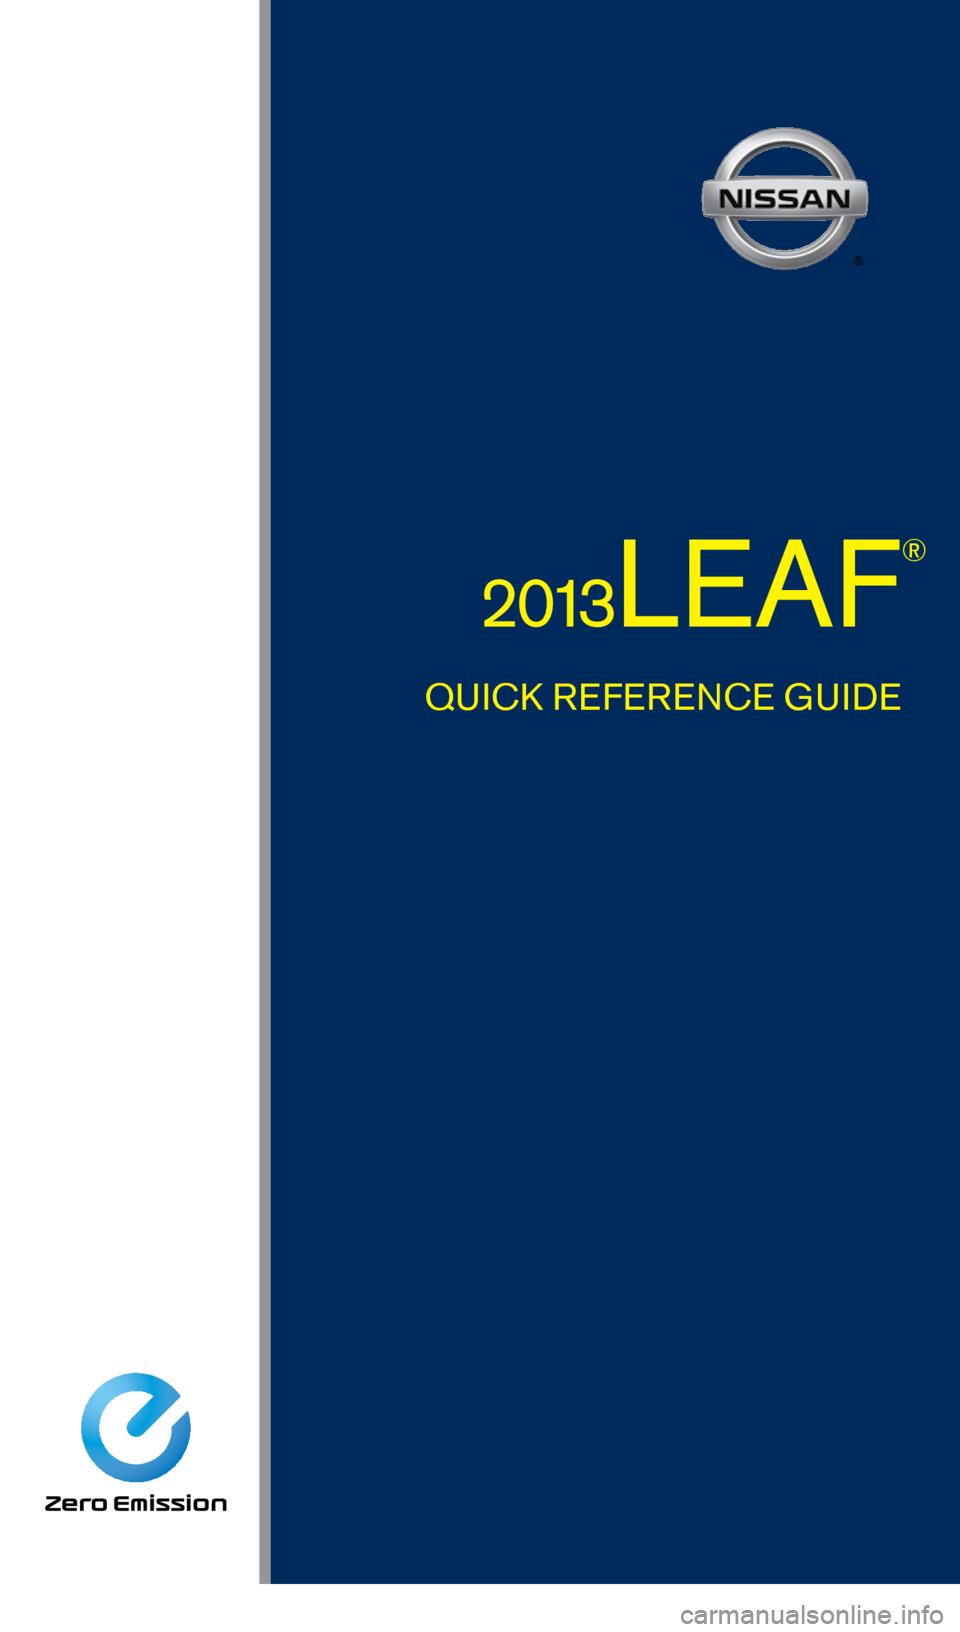 NISSAN LEAF 2013 1.G Quick Reference Guide QUIck REFERENcE G UIDE
2013LEAF
®
1275820_13_Leaf_QRG_Cover_121912.indd   212/19/12   9:38 AM 